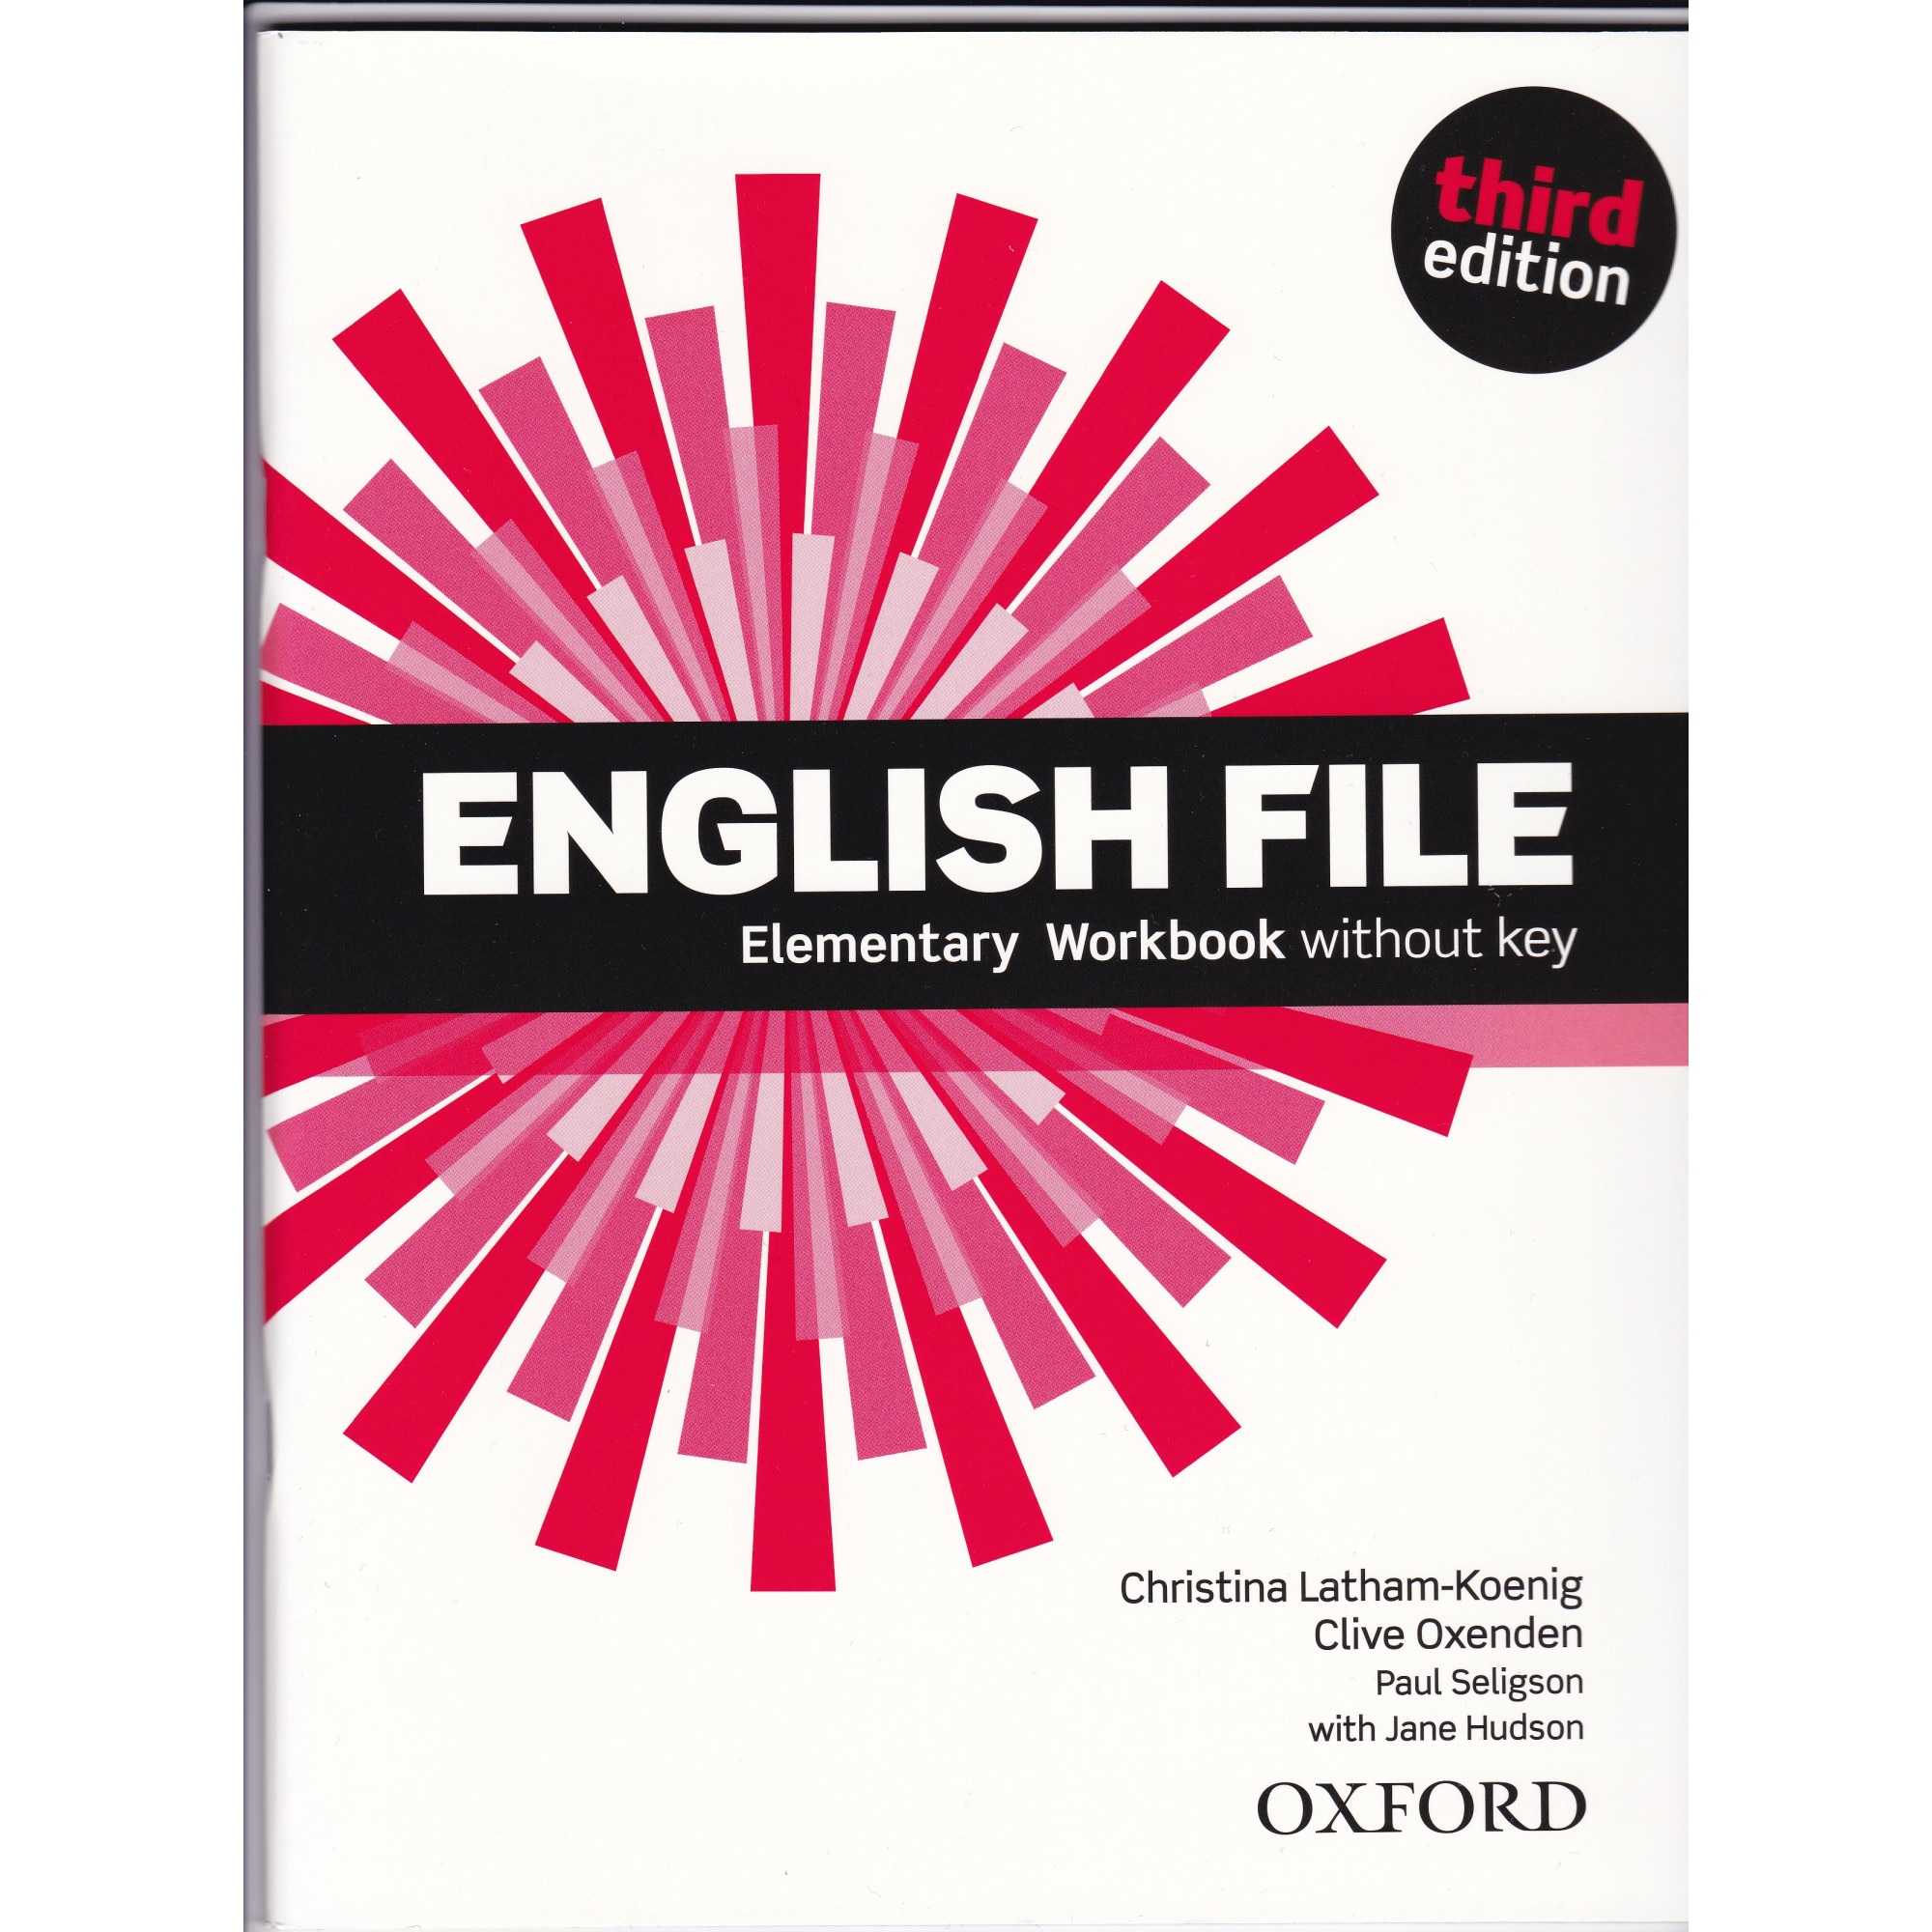 English file elementary 3rd edition. English file Elementary 3rd Edition Workbook. English file: Elementary. English file Oxford. New English file Elementary.